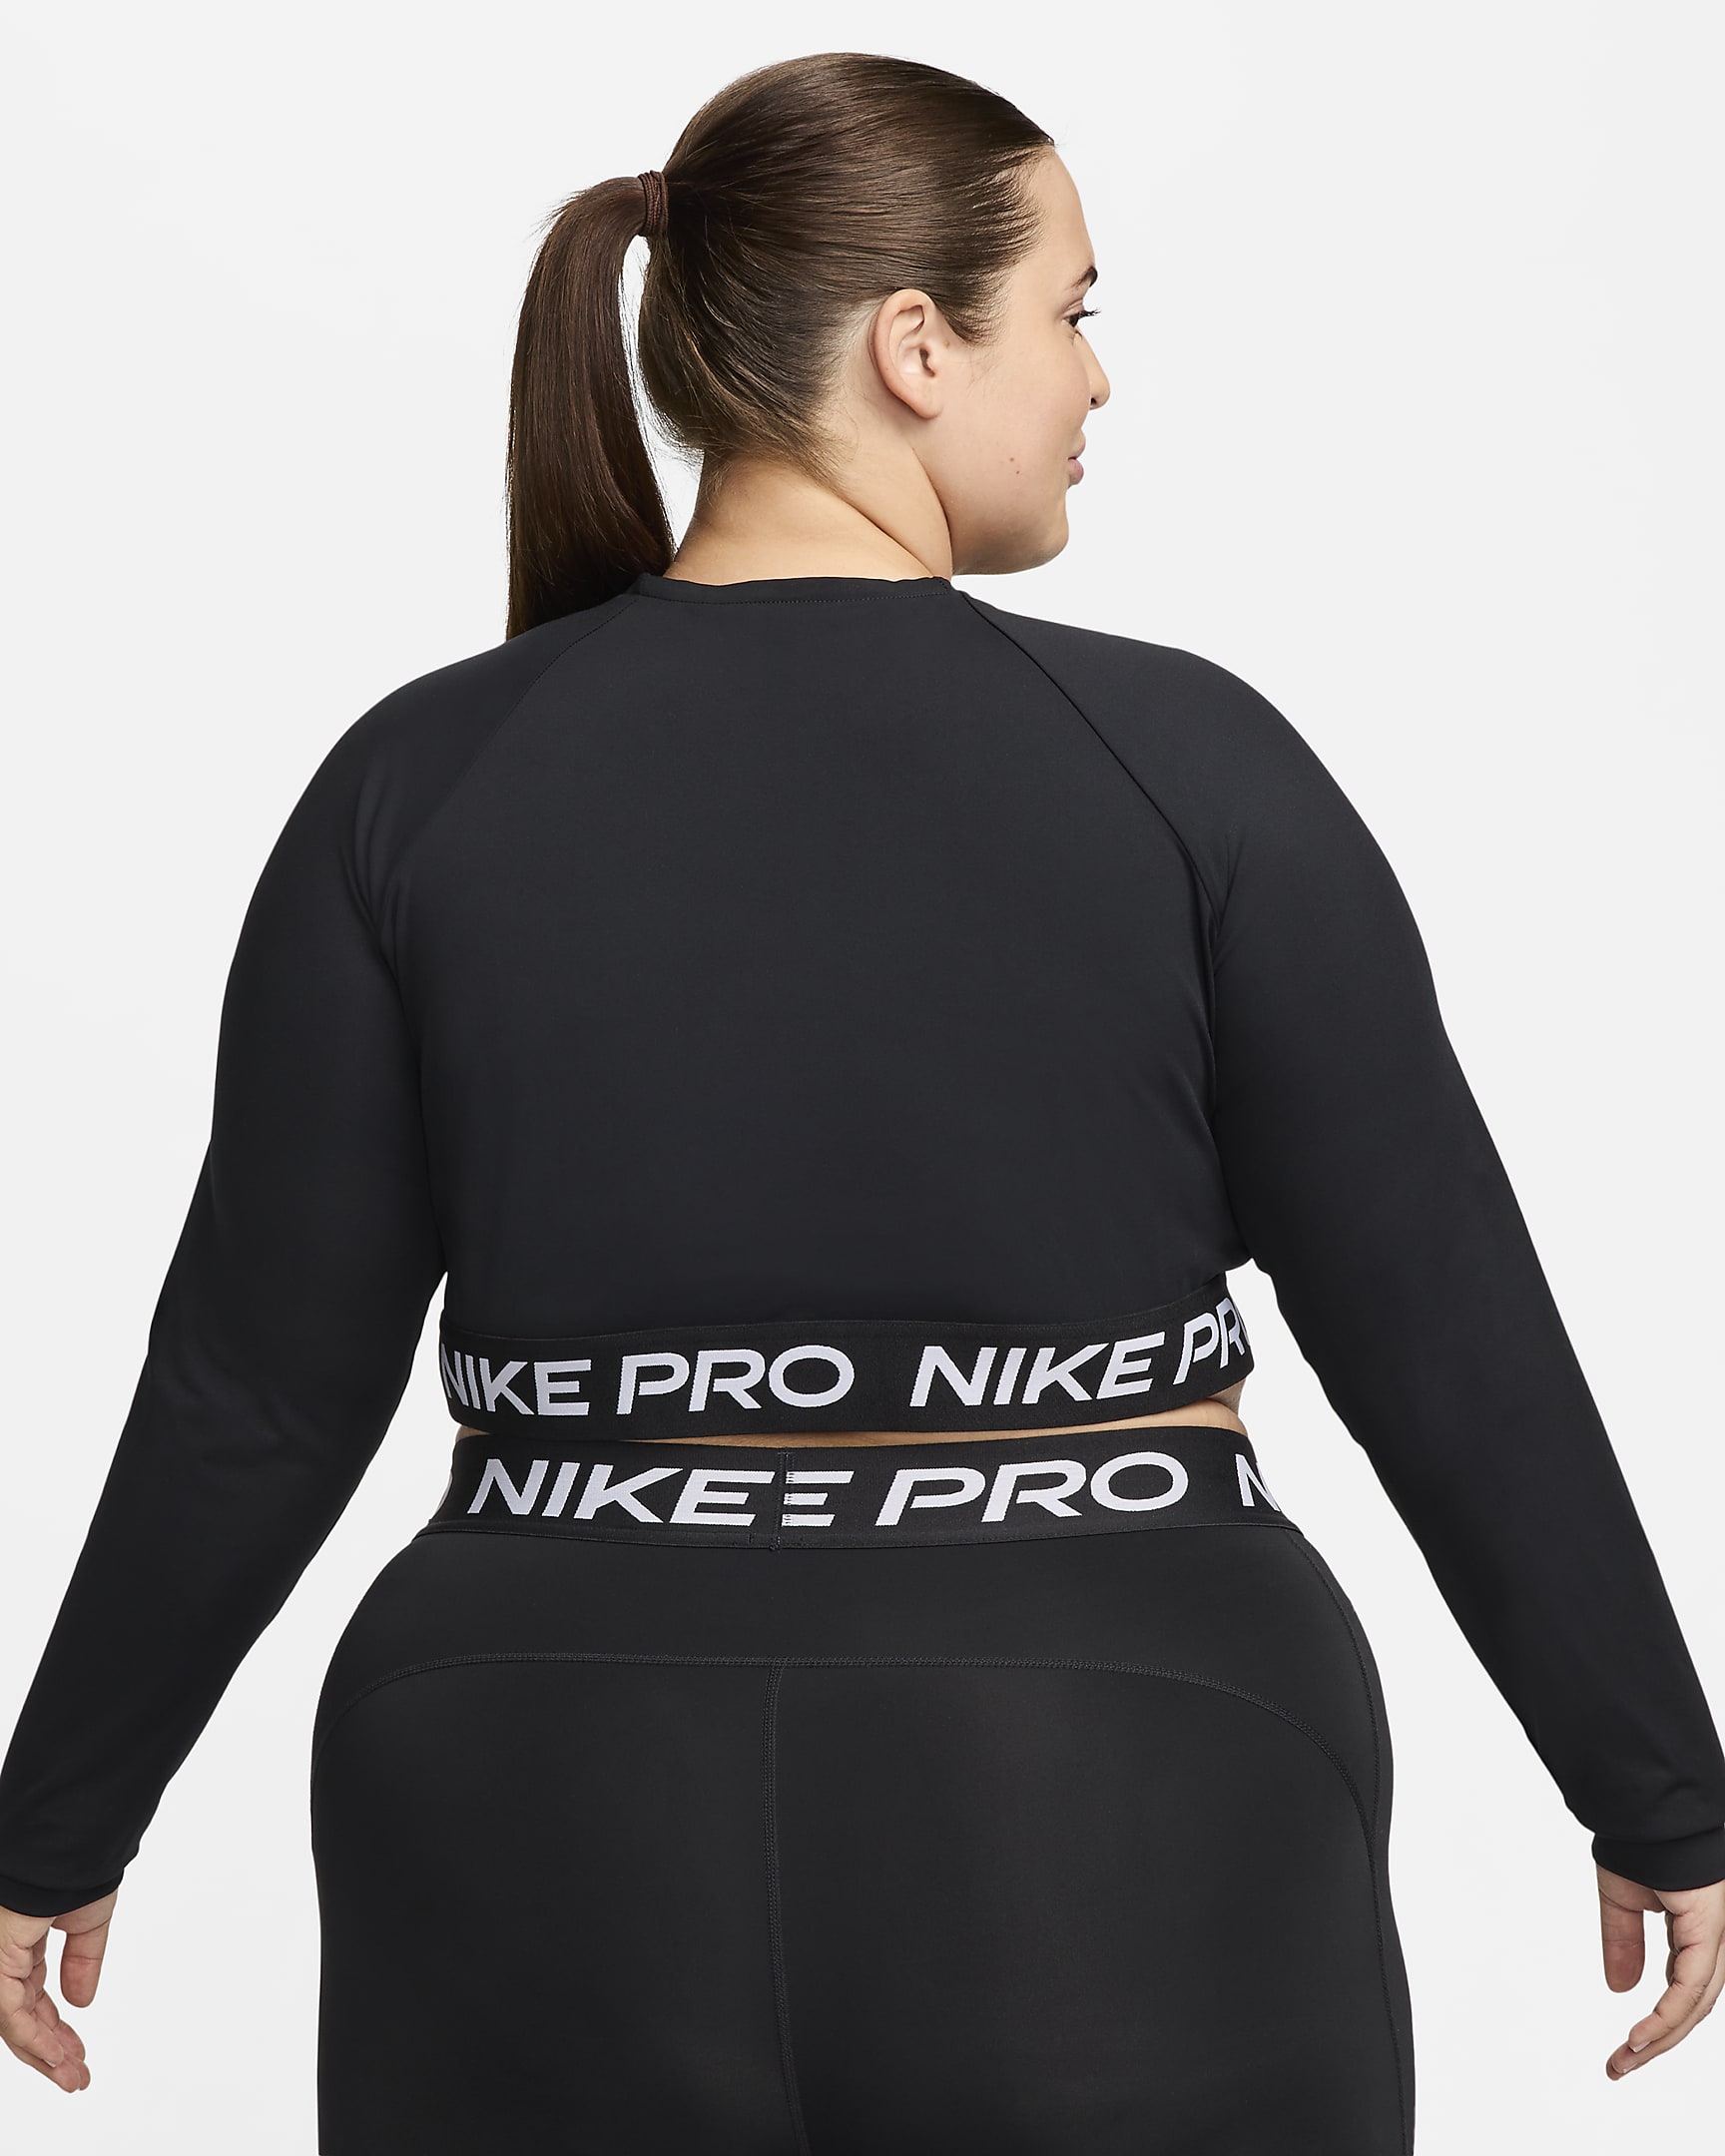 Nike Pro 365 Women's Dri-FIT Cropped Long-Sleeve Top (Plus Size). Nike BG